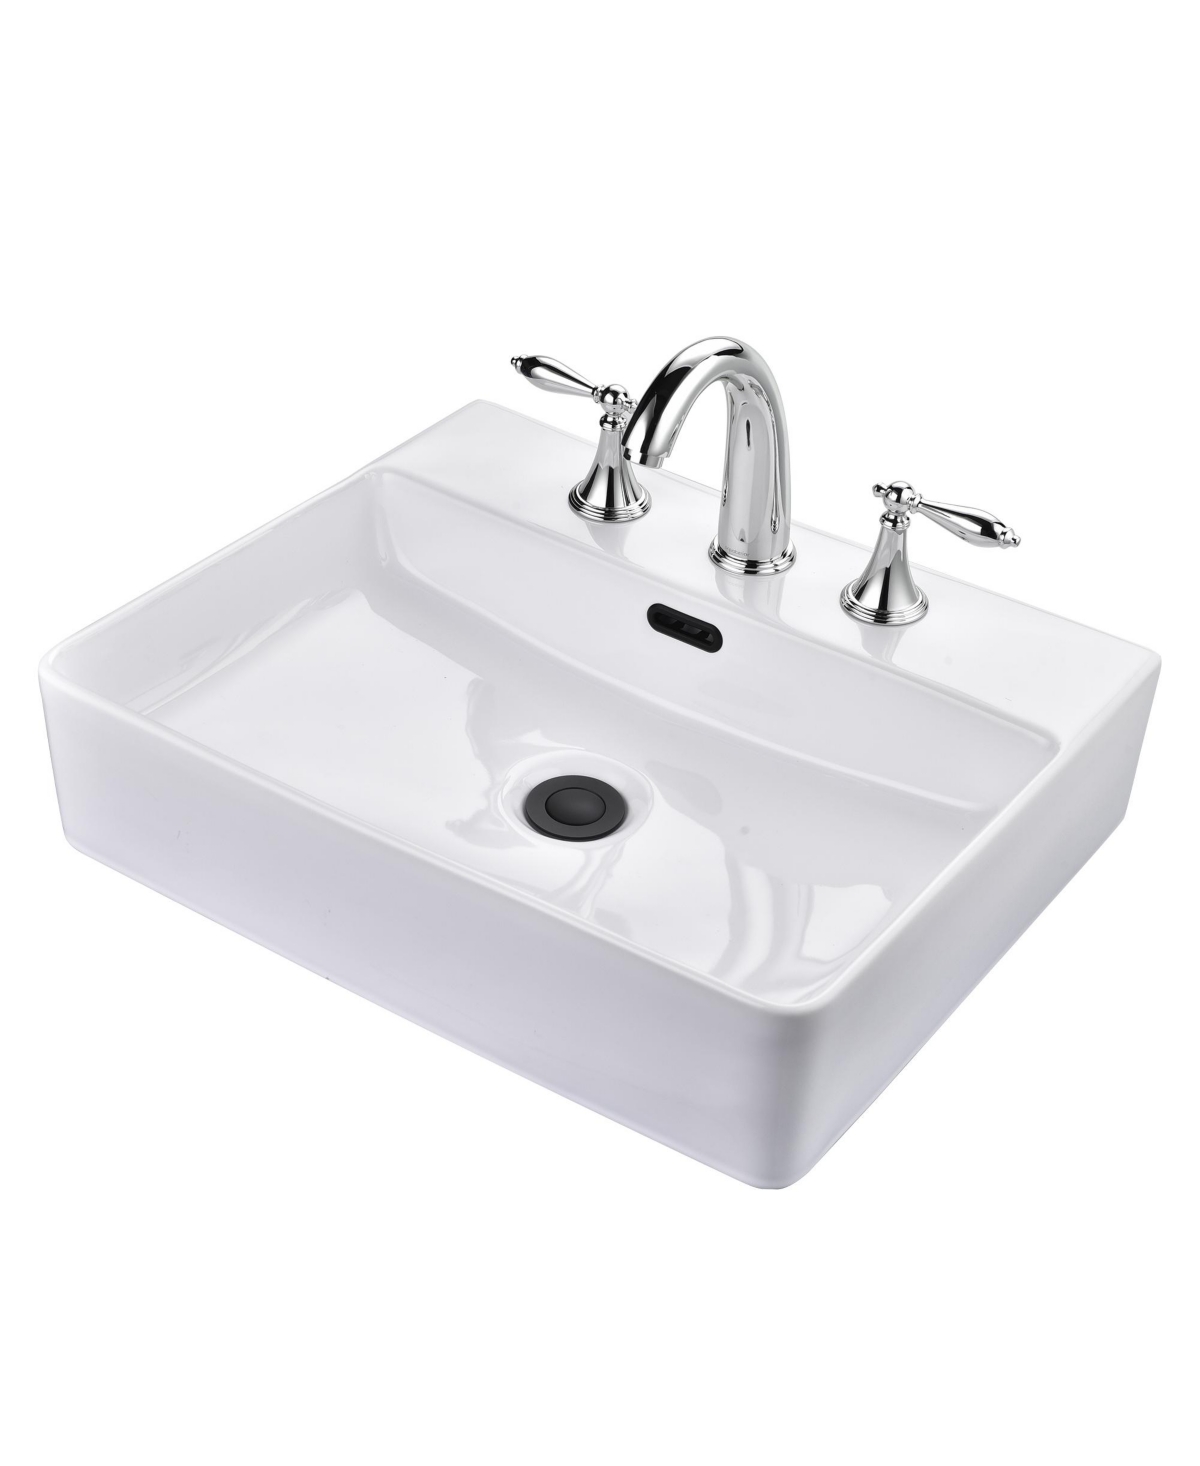 Rectangle Ceramic Sink Bathroom Countertop Basin with Faucet Drain - Natural